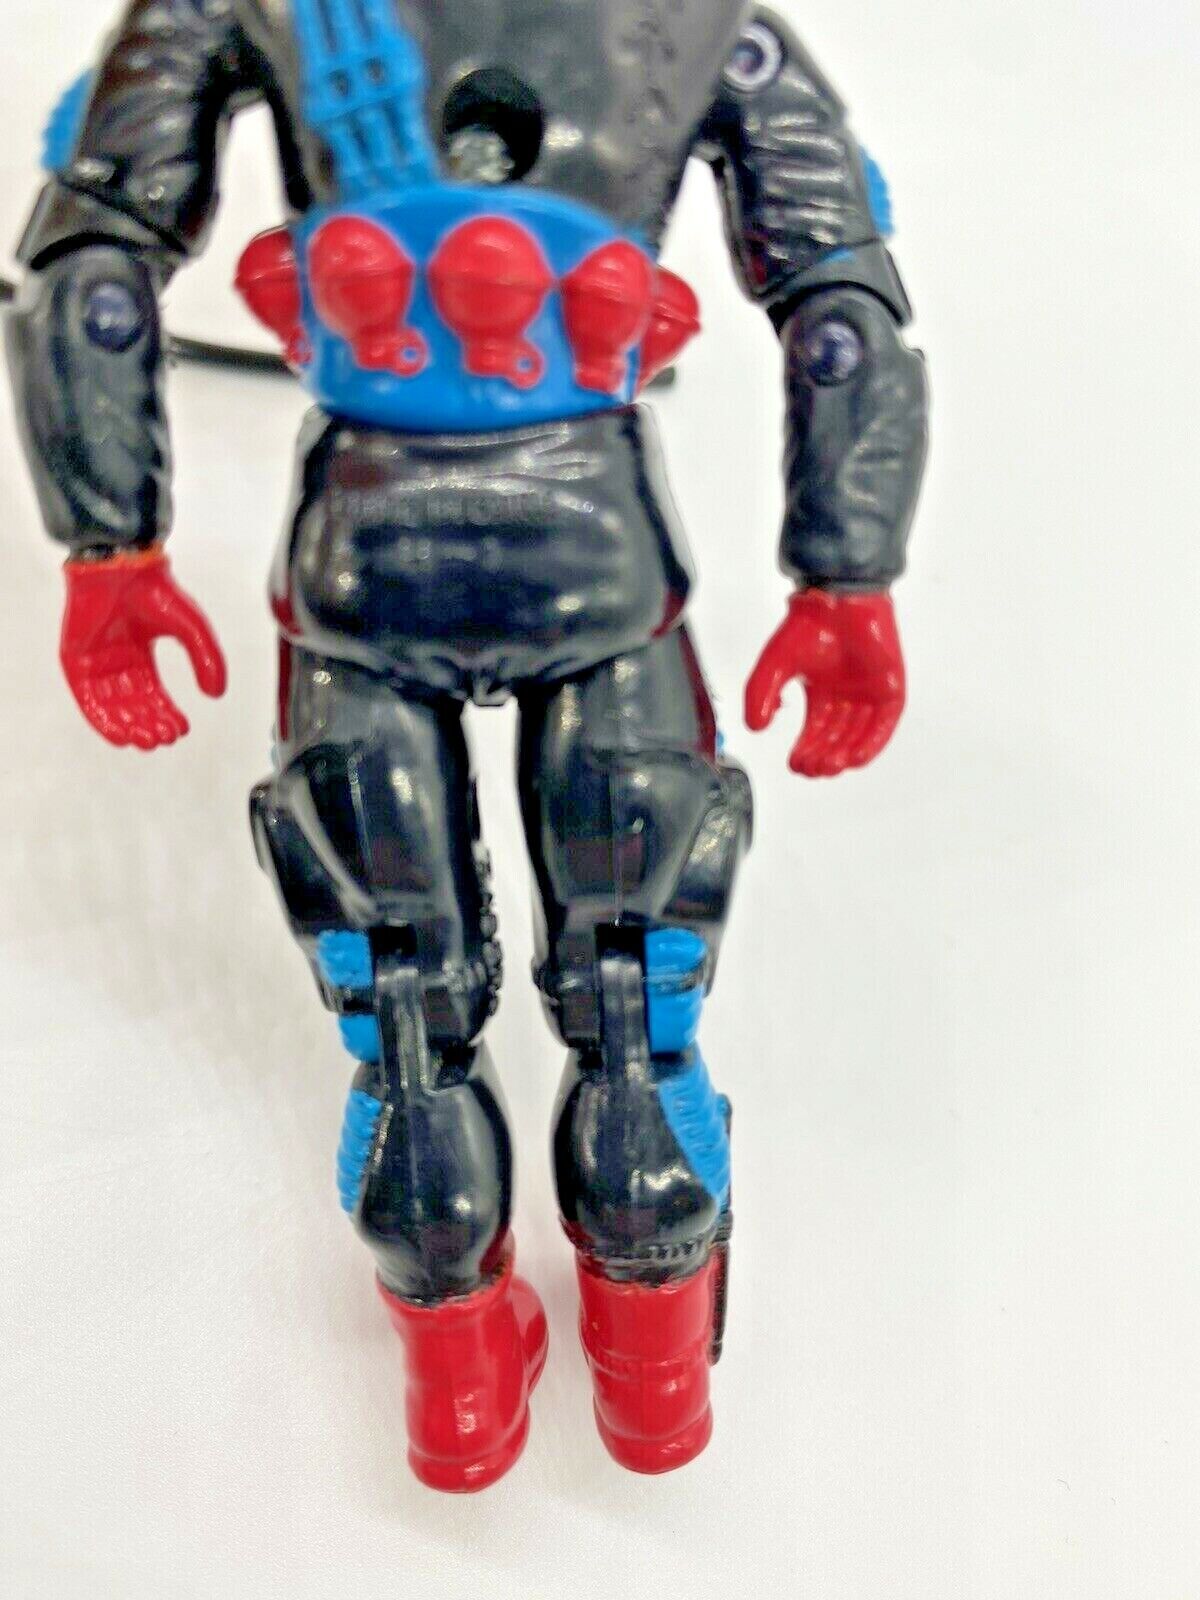 G.I. Joe TARGAT complete Cobra figure with card